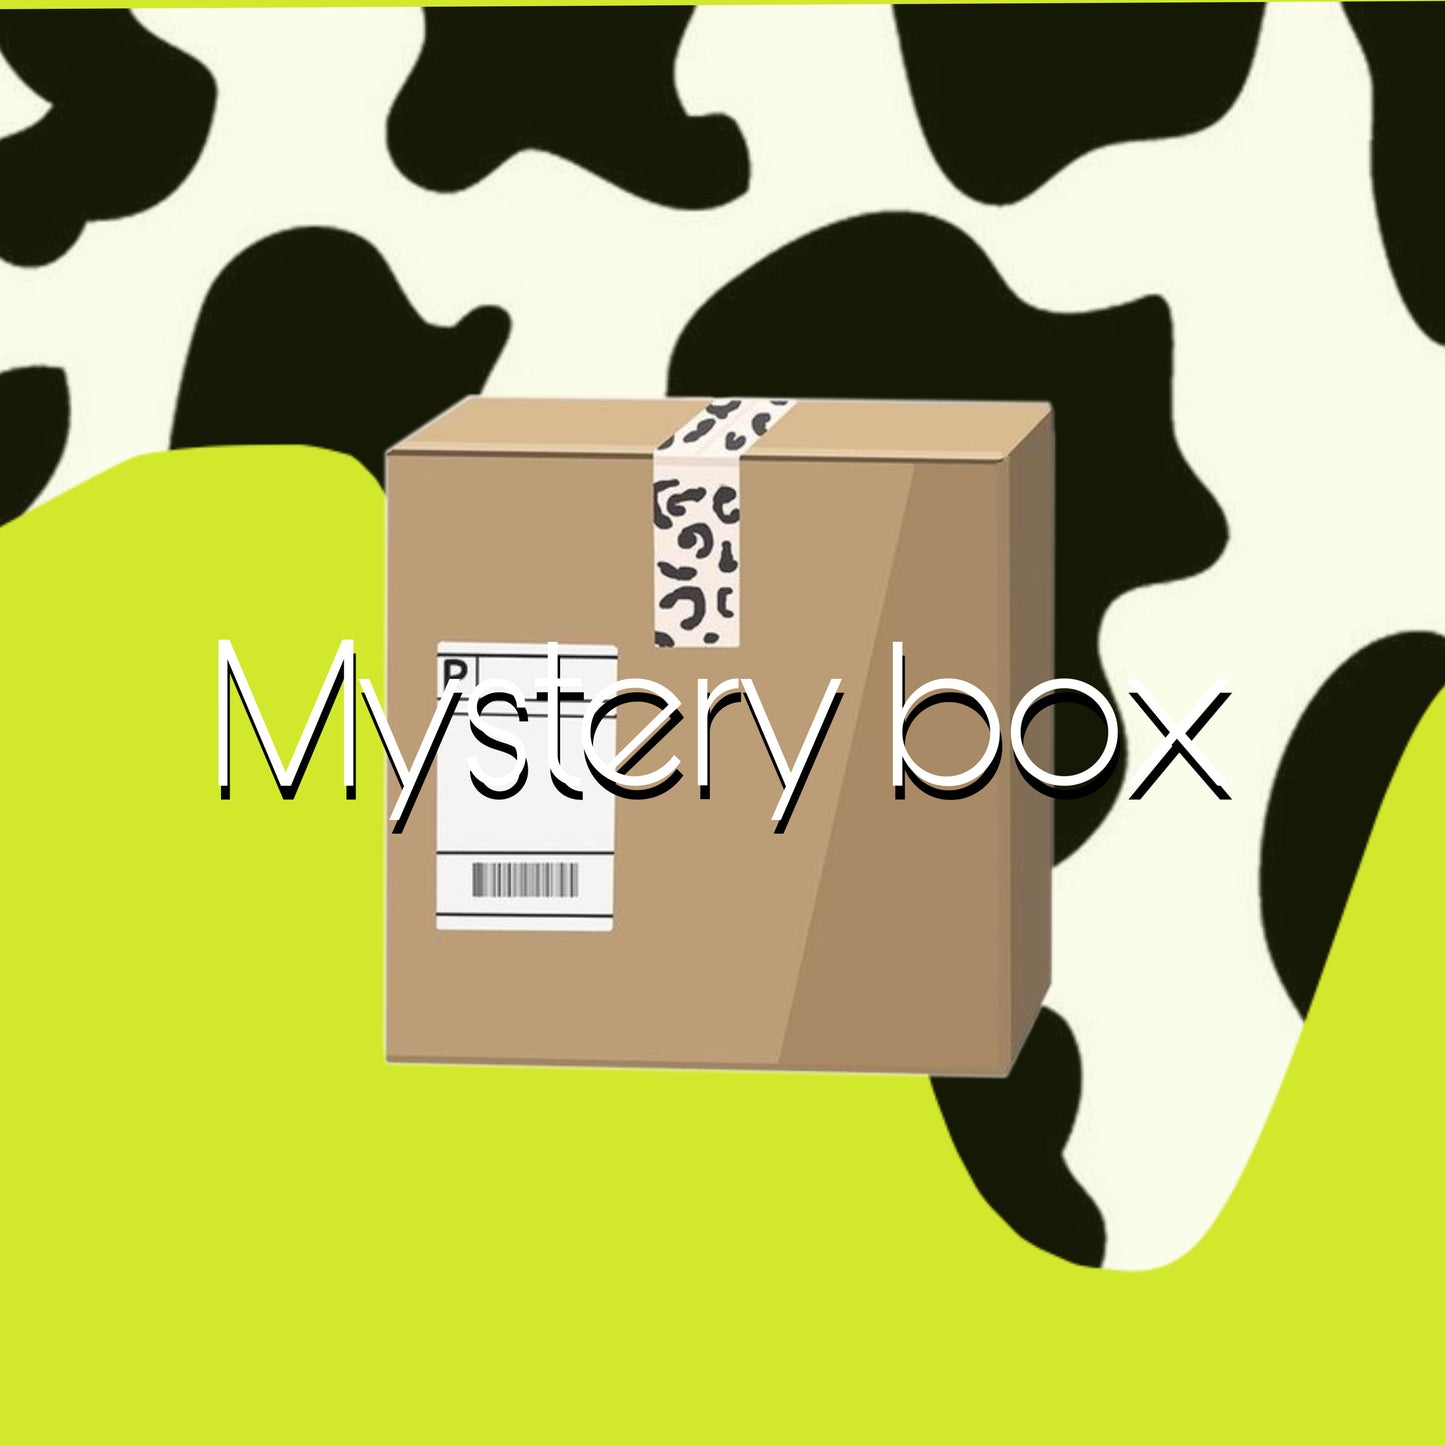 Mystery box 2022